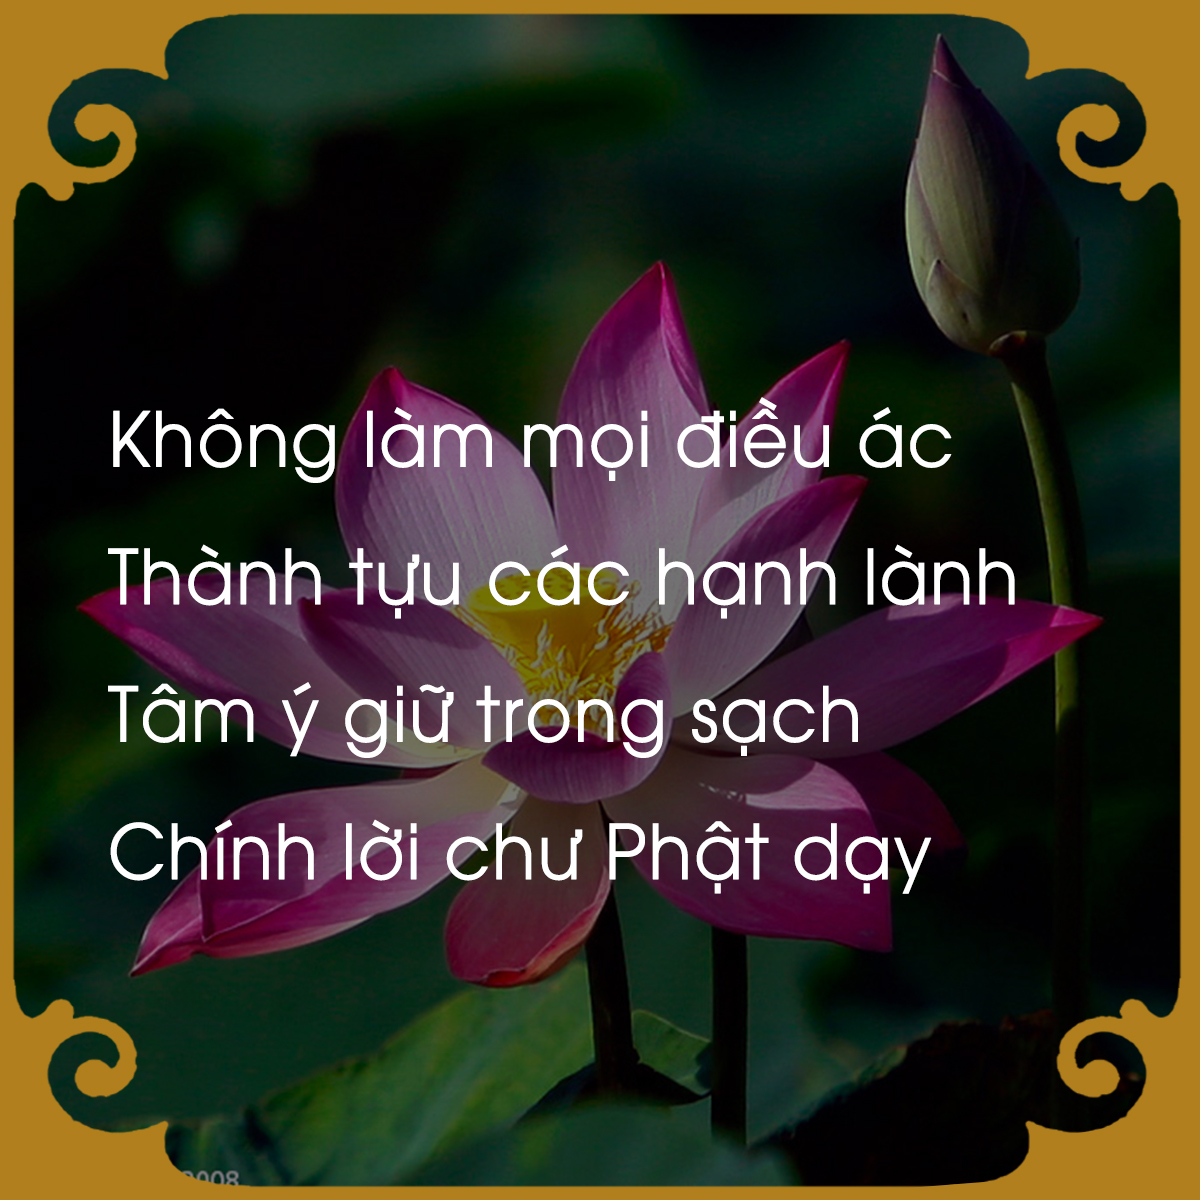 chiem-nghiem-luat-nhan-qua-qua-loi-phat-day-giadinhonline.vn 5